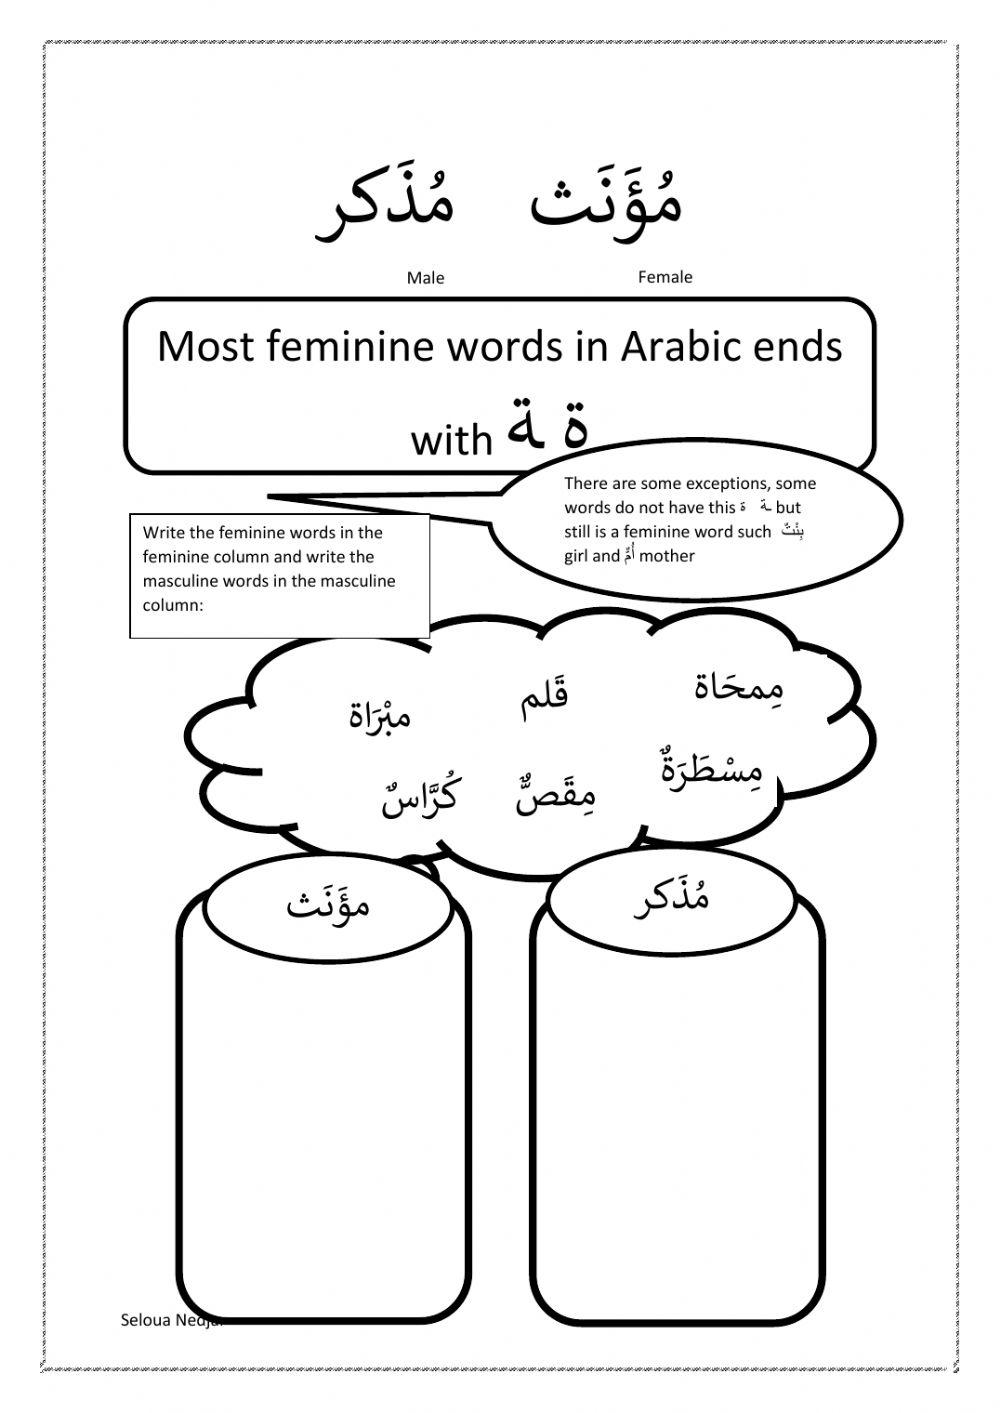 Feminine and Masculine words in Arabic